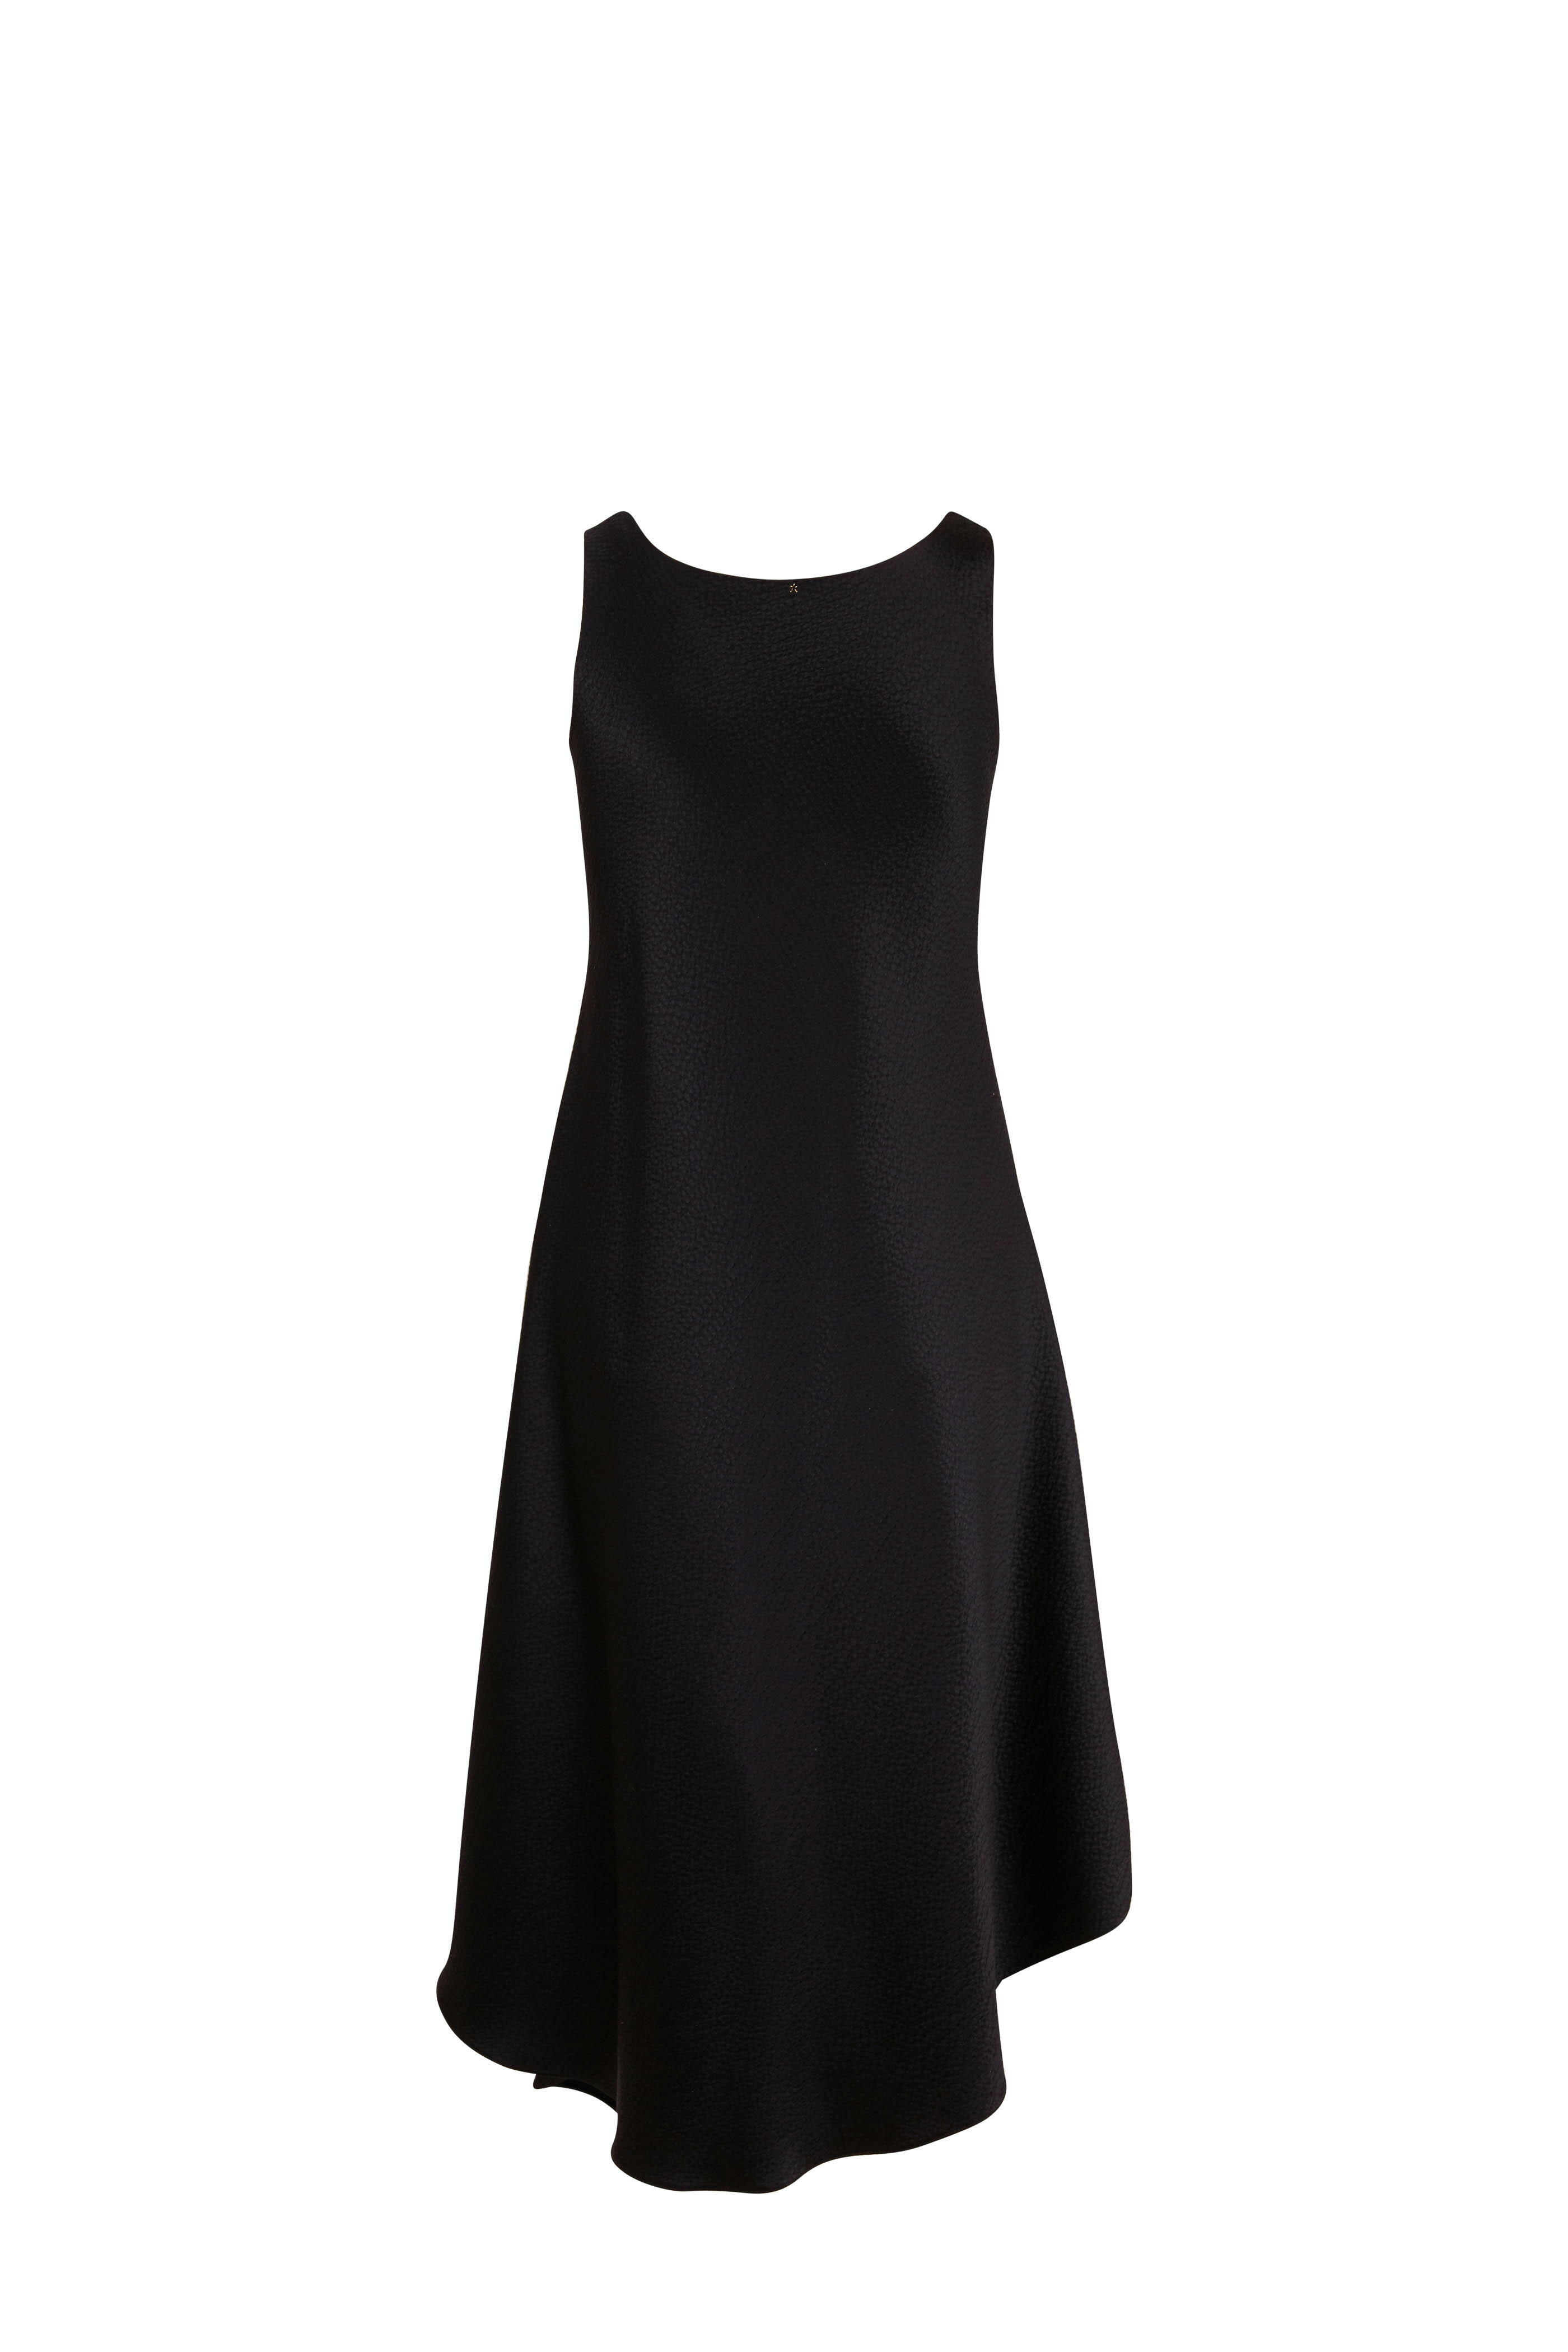 Peter Cohen - Femina Black Hammered Silk Sleeveless Dress